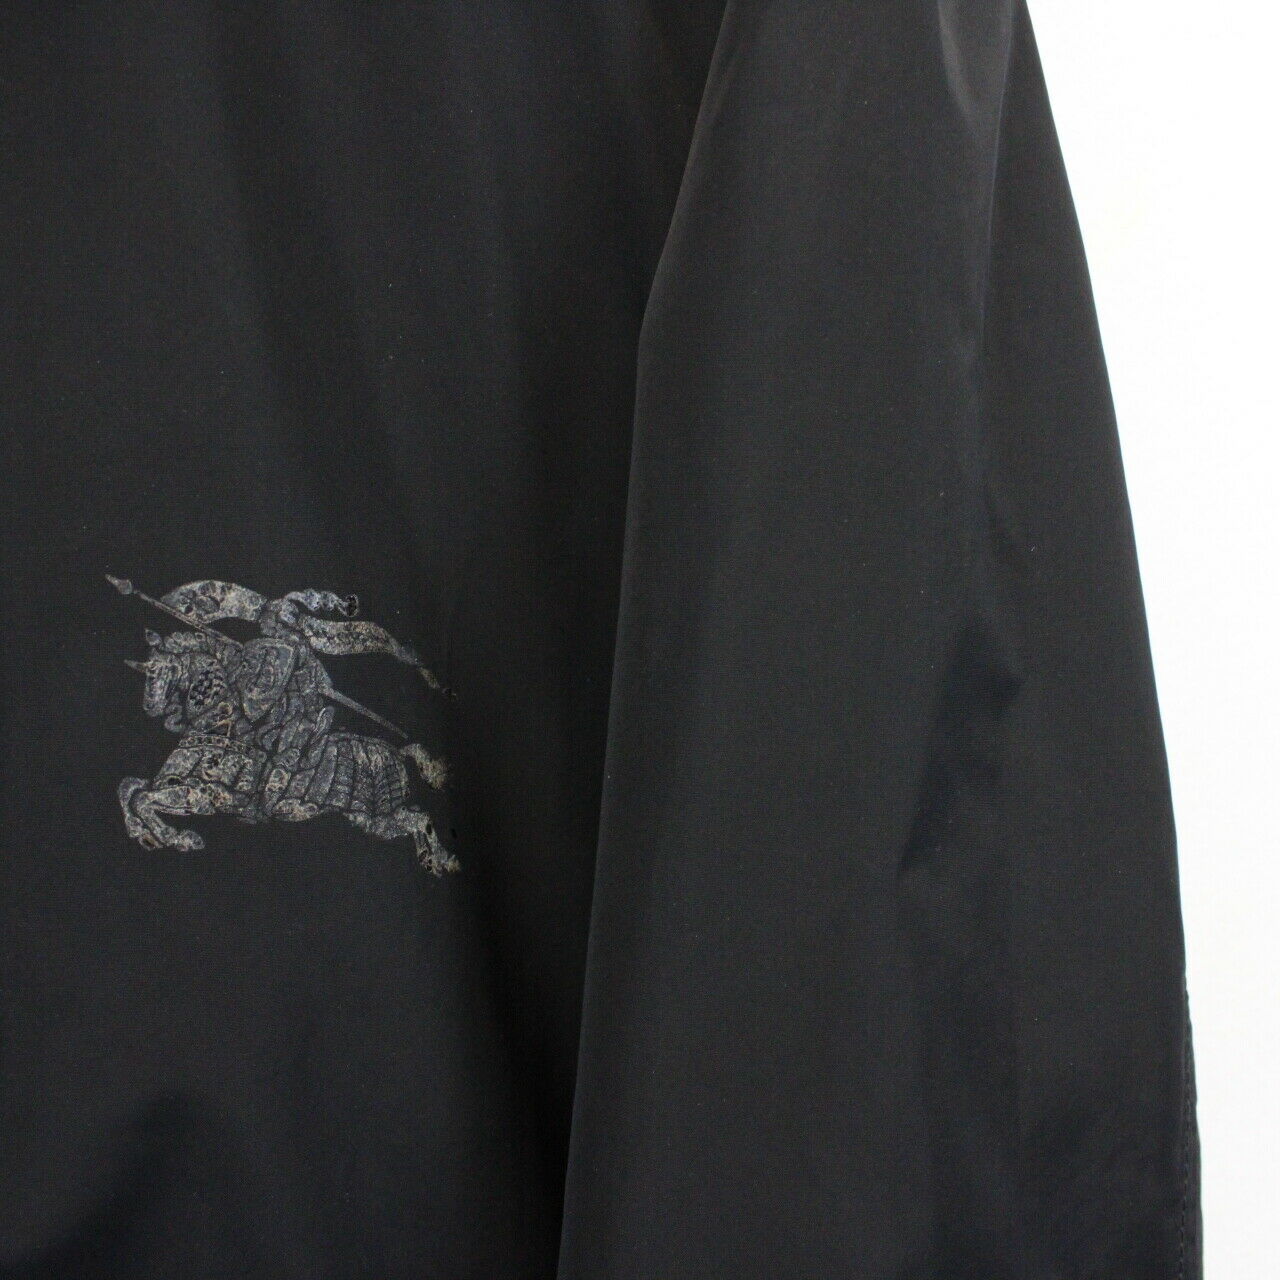 Burberry | Jackets & Coats | Burberry Brit Mens Black Heritage Cotton Field  Jacket Size M Color Navy | Poshmark